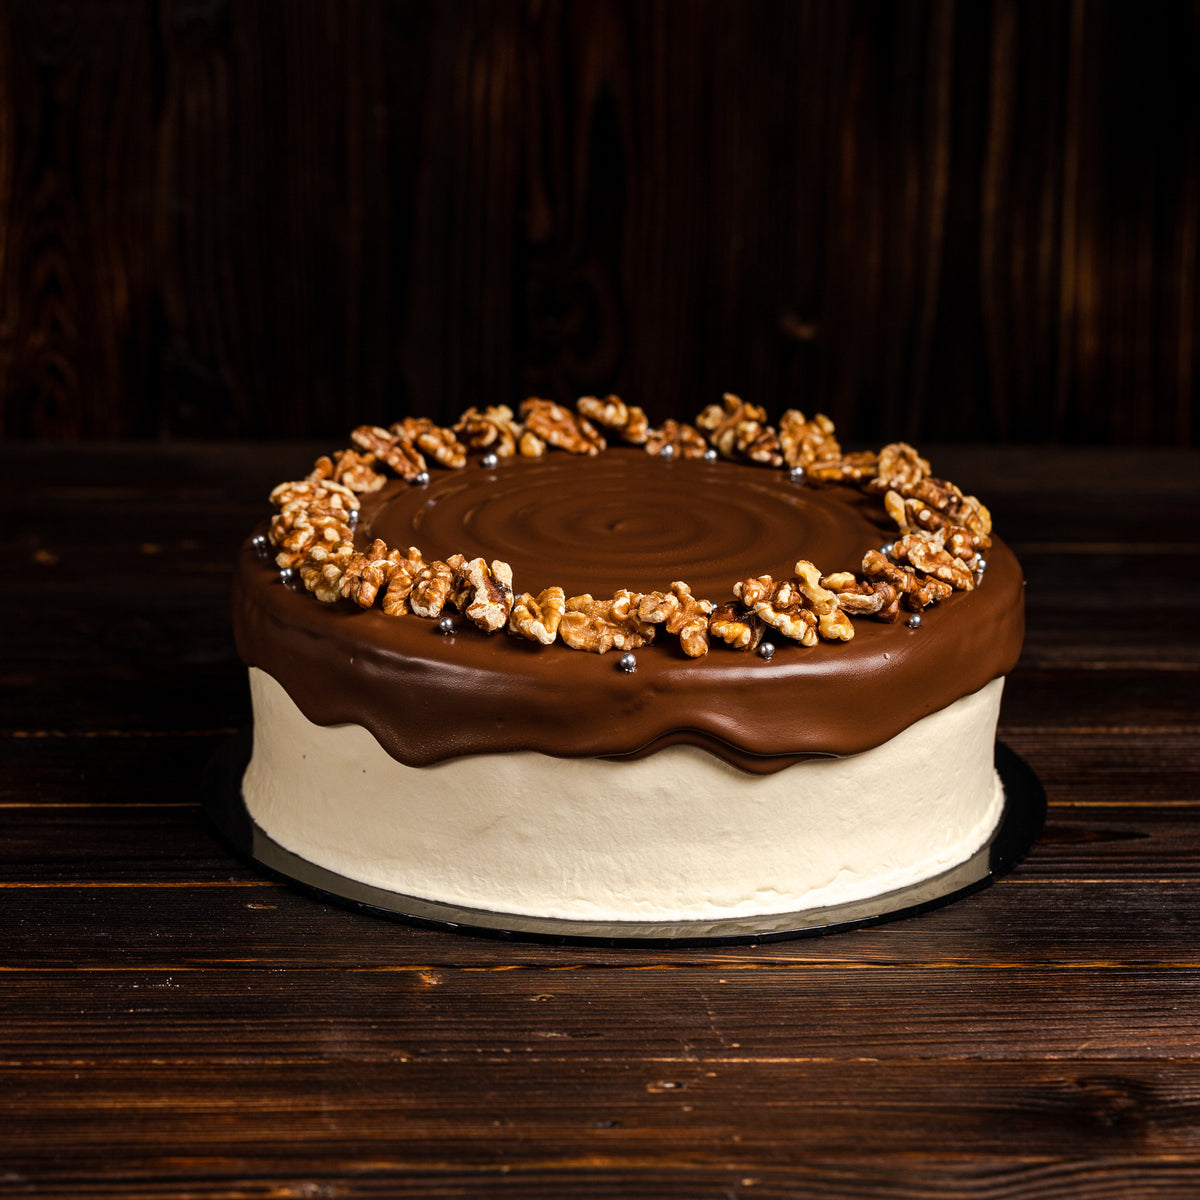 Chocolate banana birthday cake - Healthy Food Guide